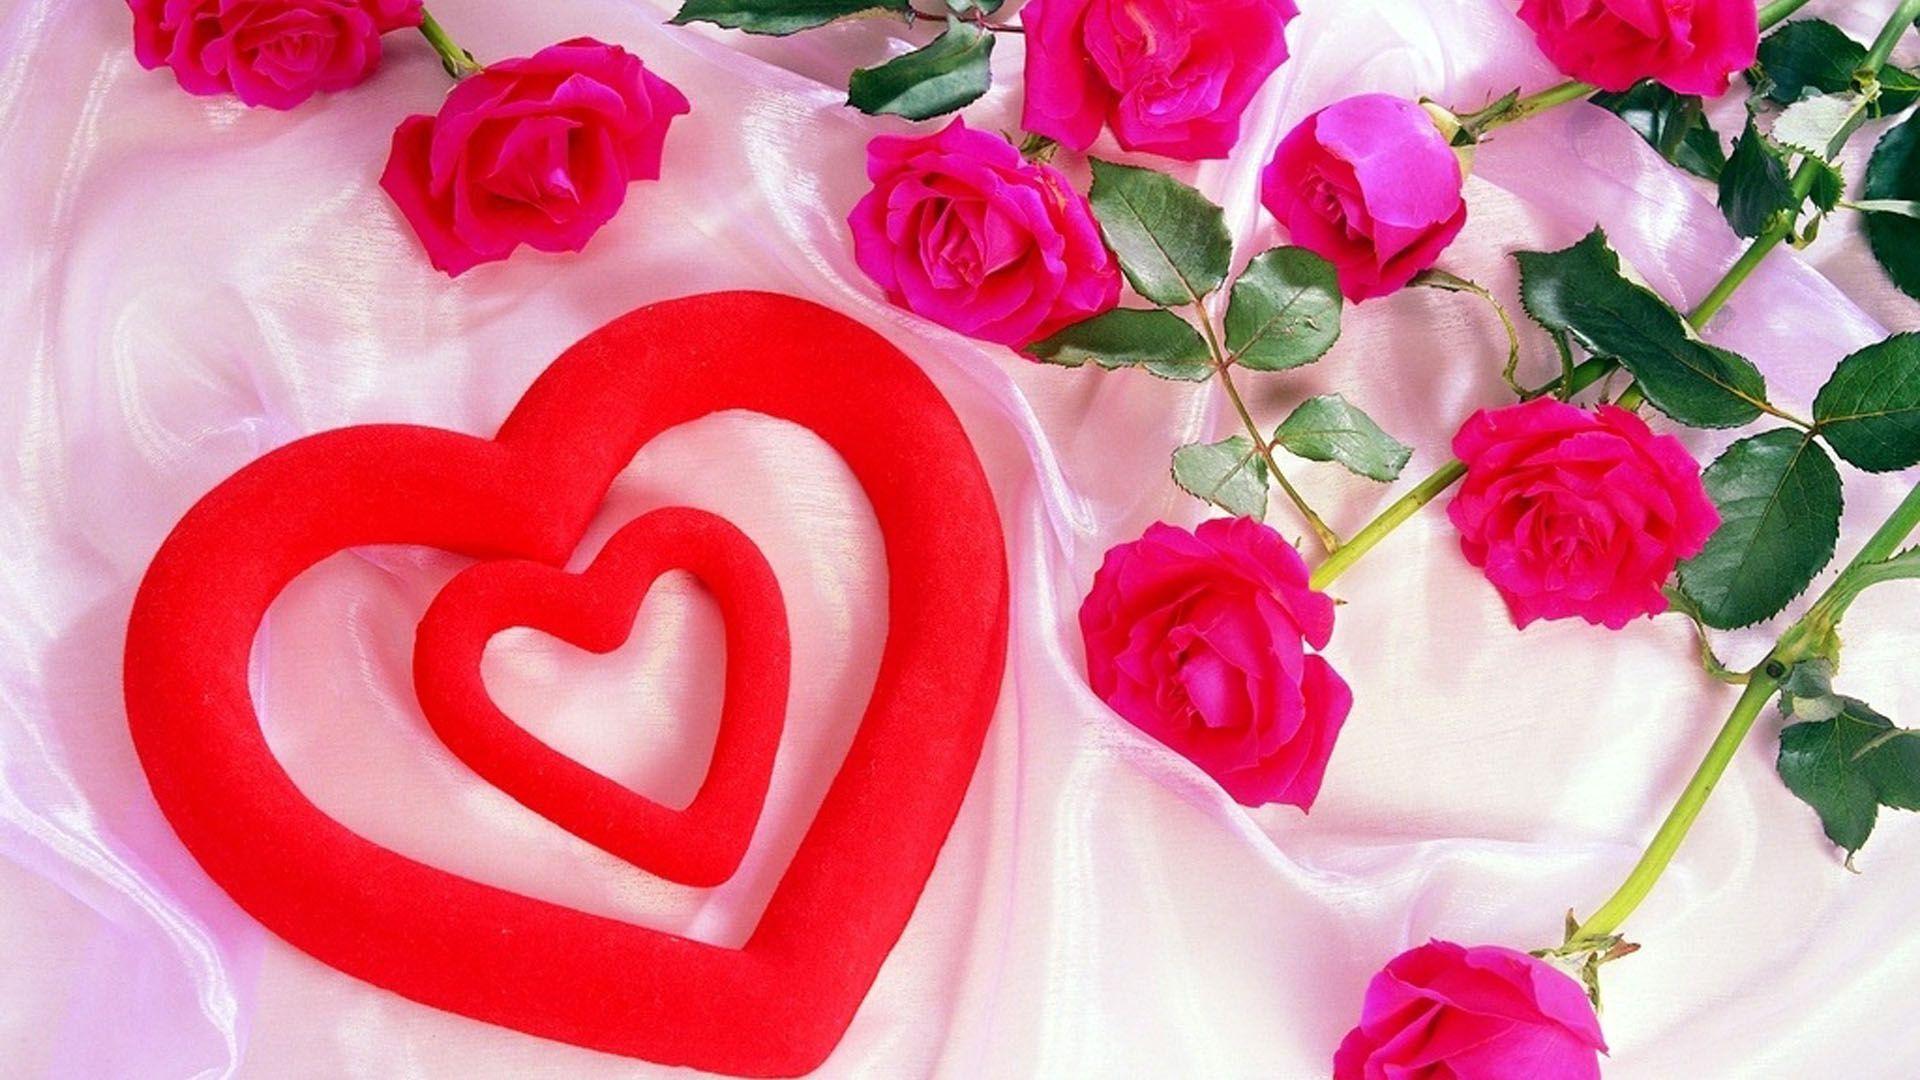 Saint Valentine&;s Day Love Heart Image Picture Wallpaper 2015